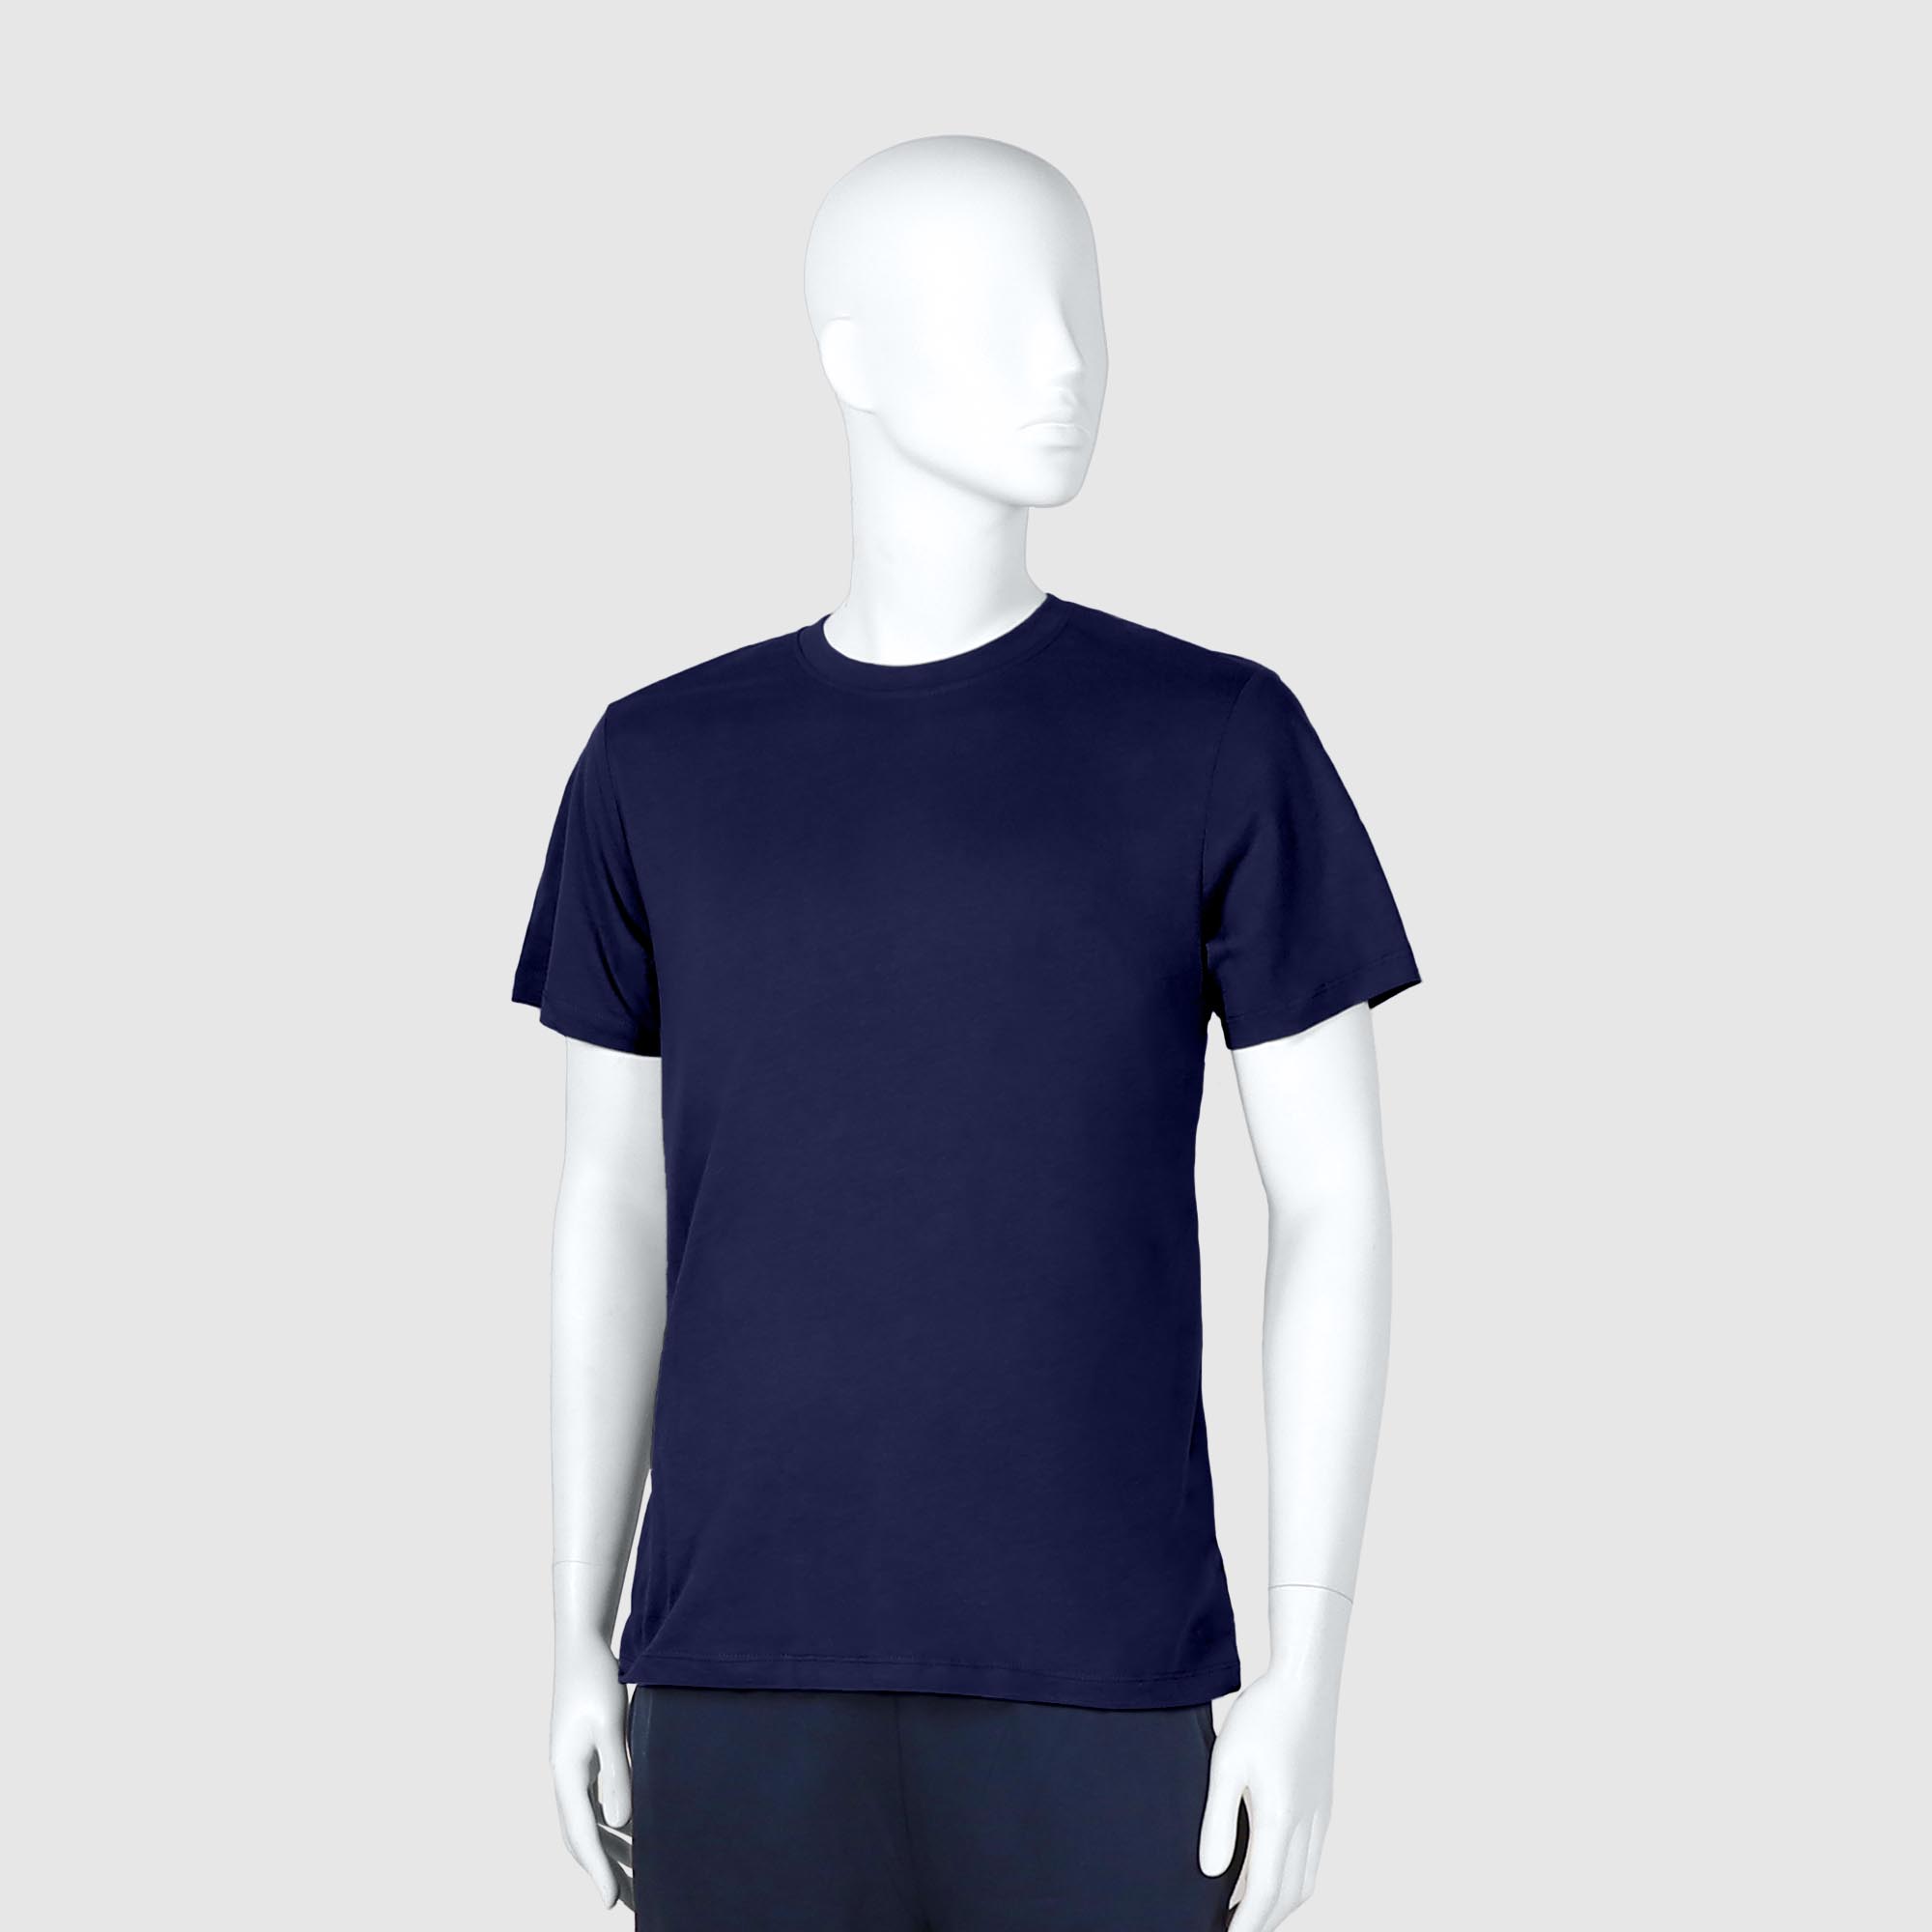 Мужская футболка Diva Teks синяя (DTD-05), цвет синий, размер 44-46